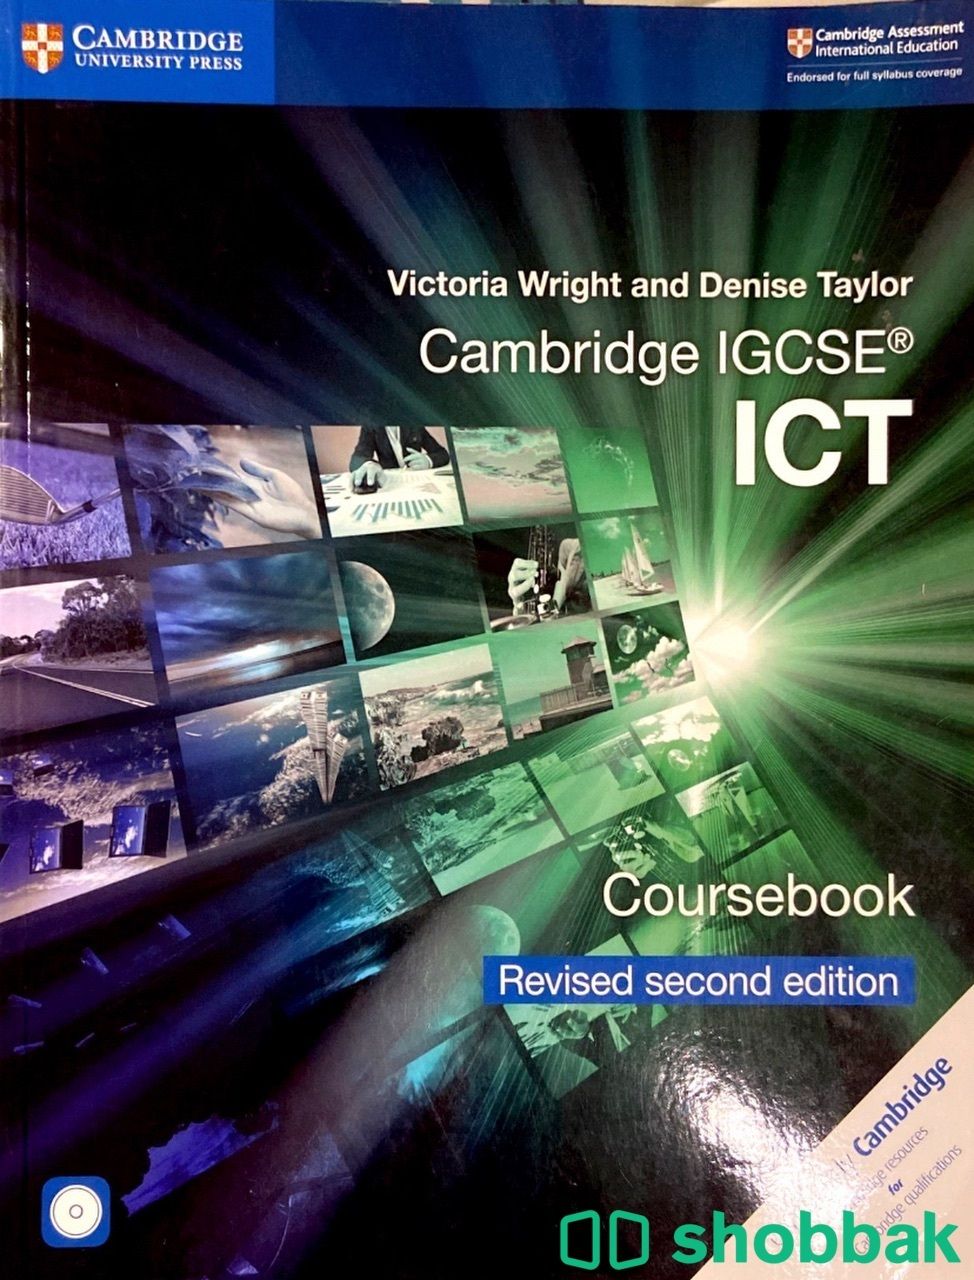 كتاب طالب:Cambridge ICT Book Shobbak Saudi Arabia